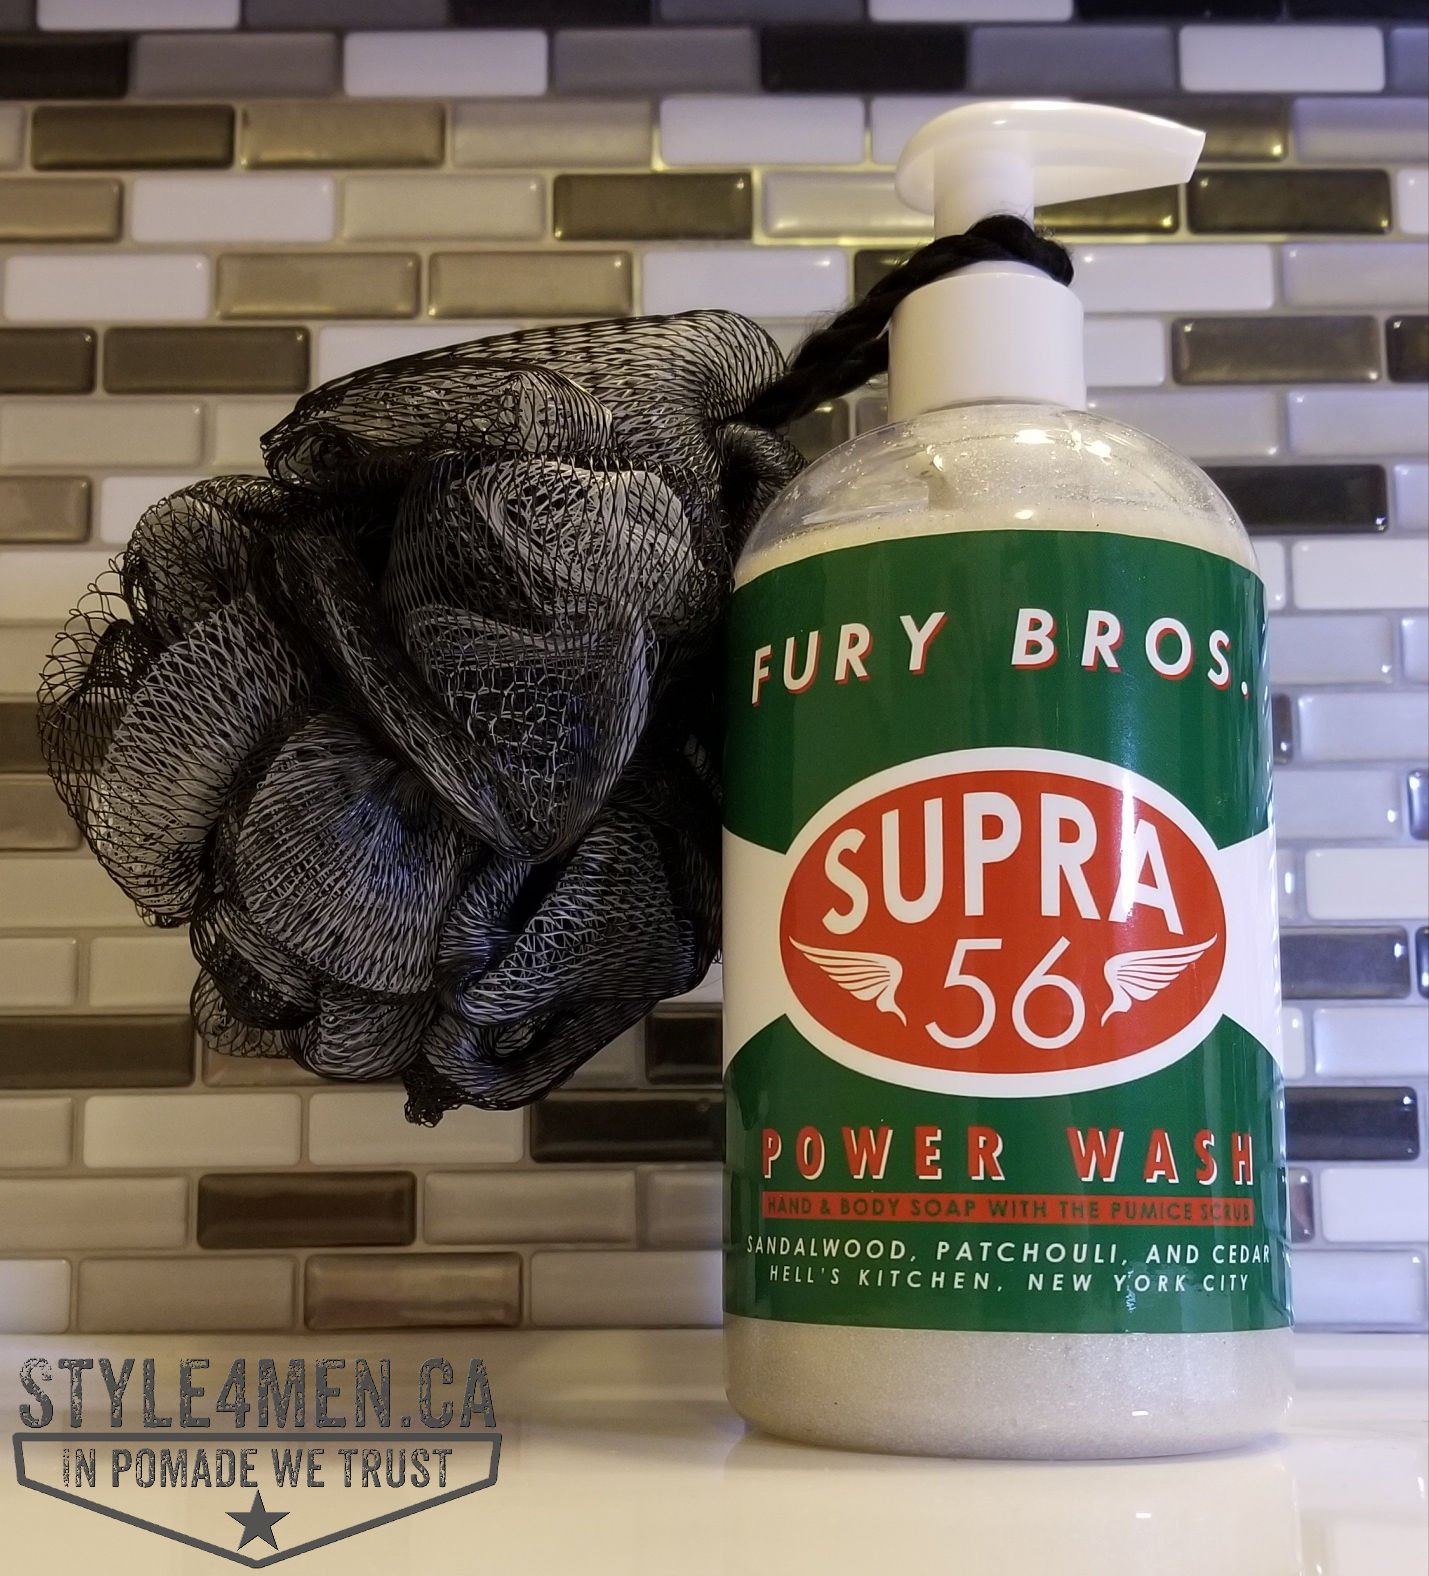 Fury Bros. Power Wash